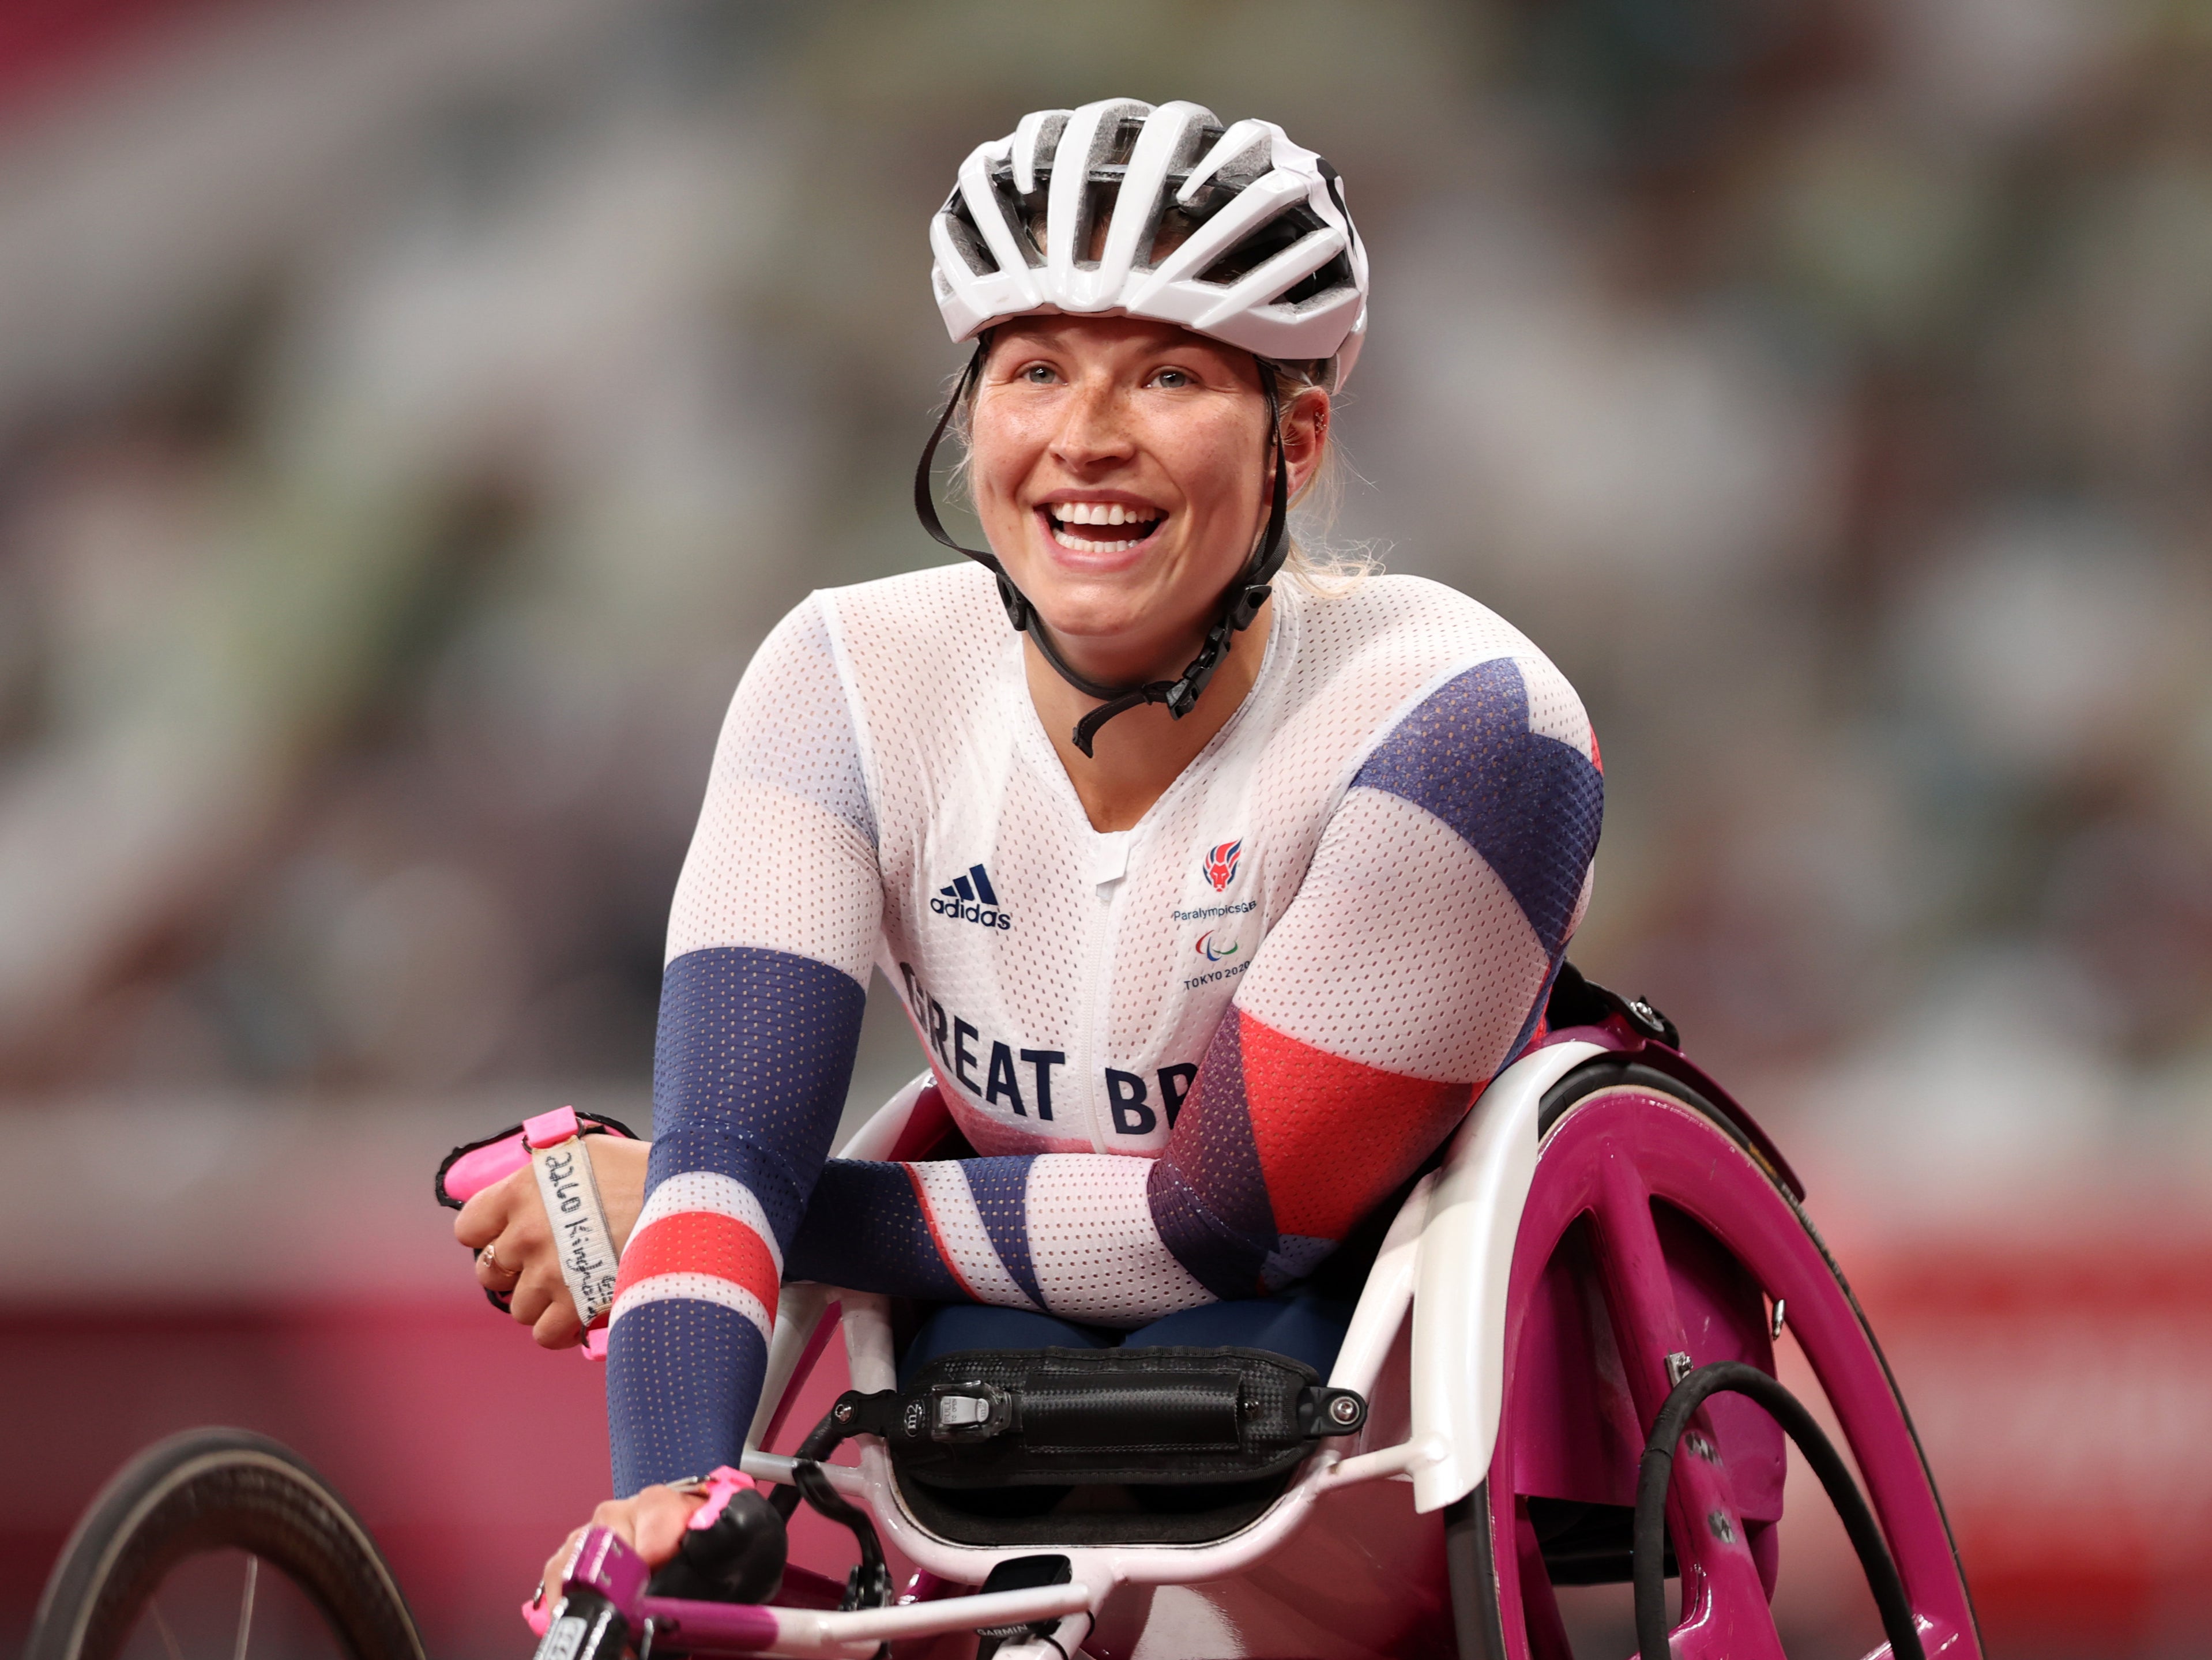 Samantha Kinghorn of Team Great Britain celebrates winning bronze